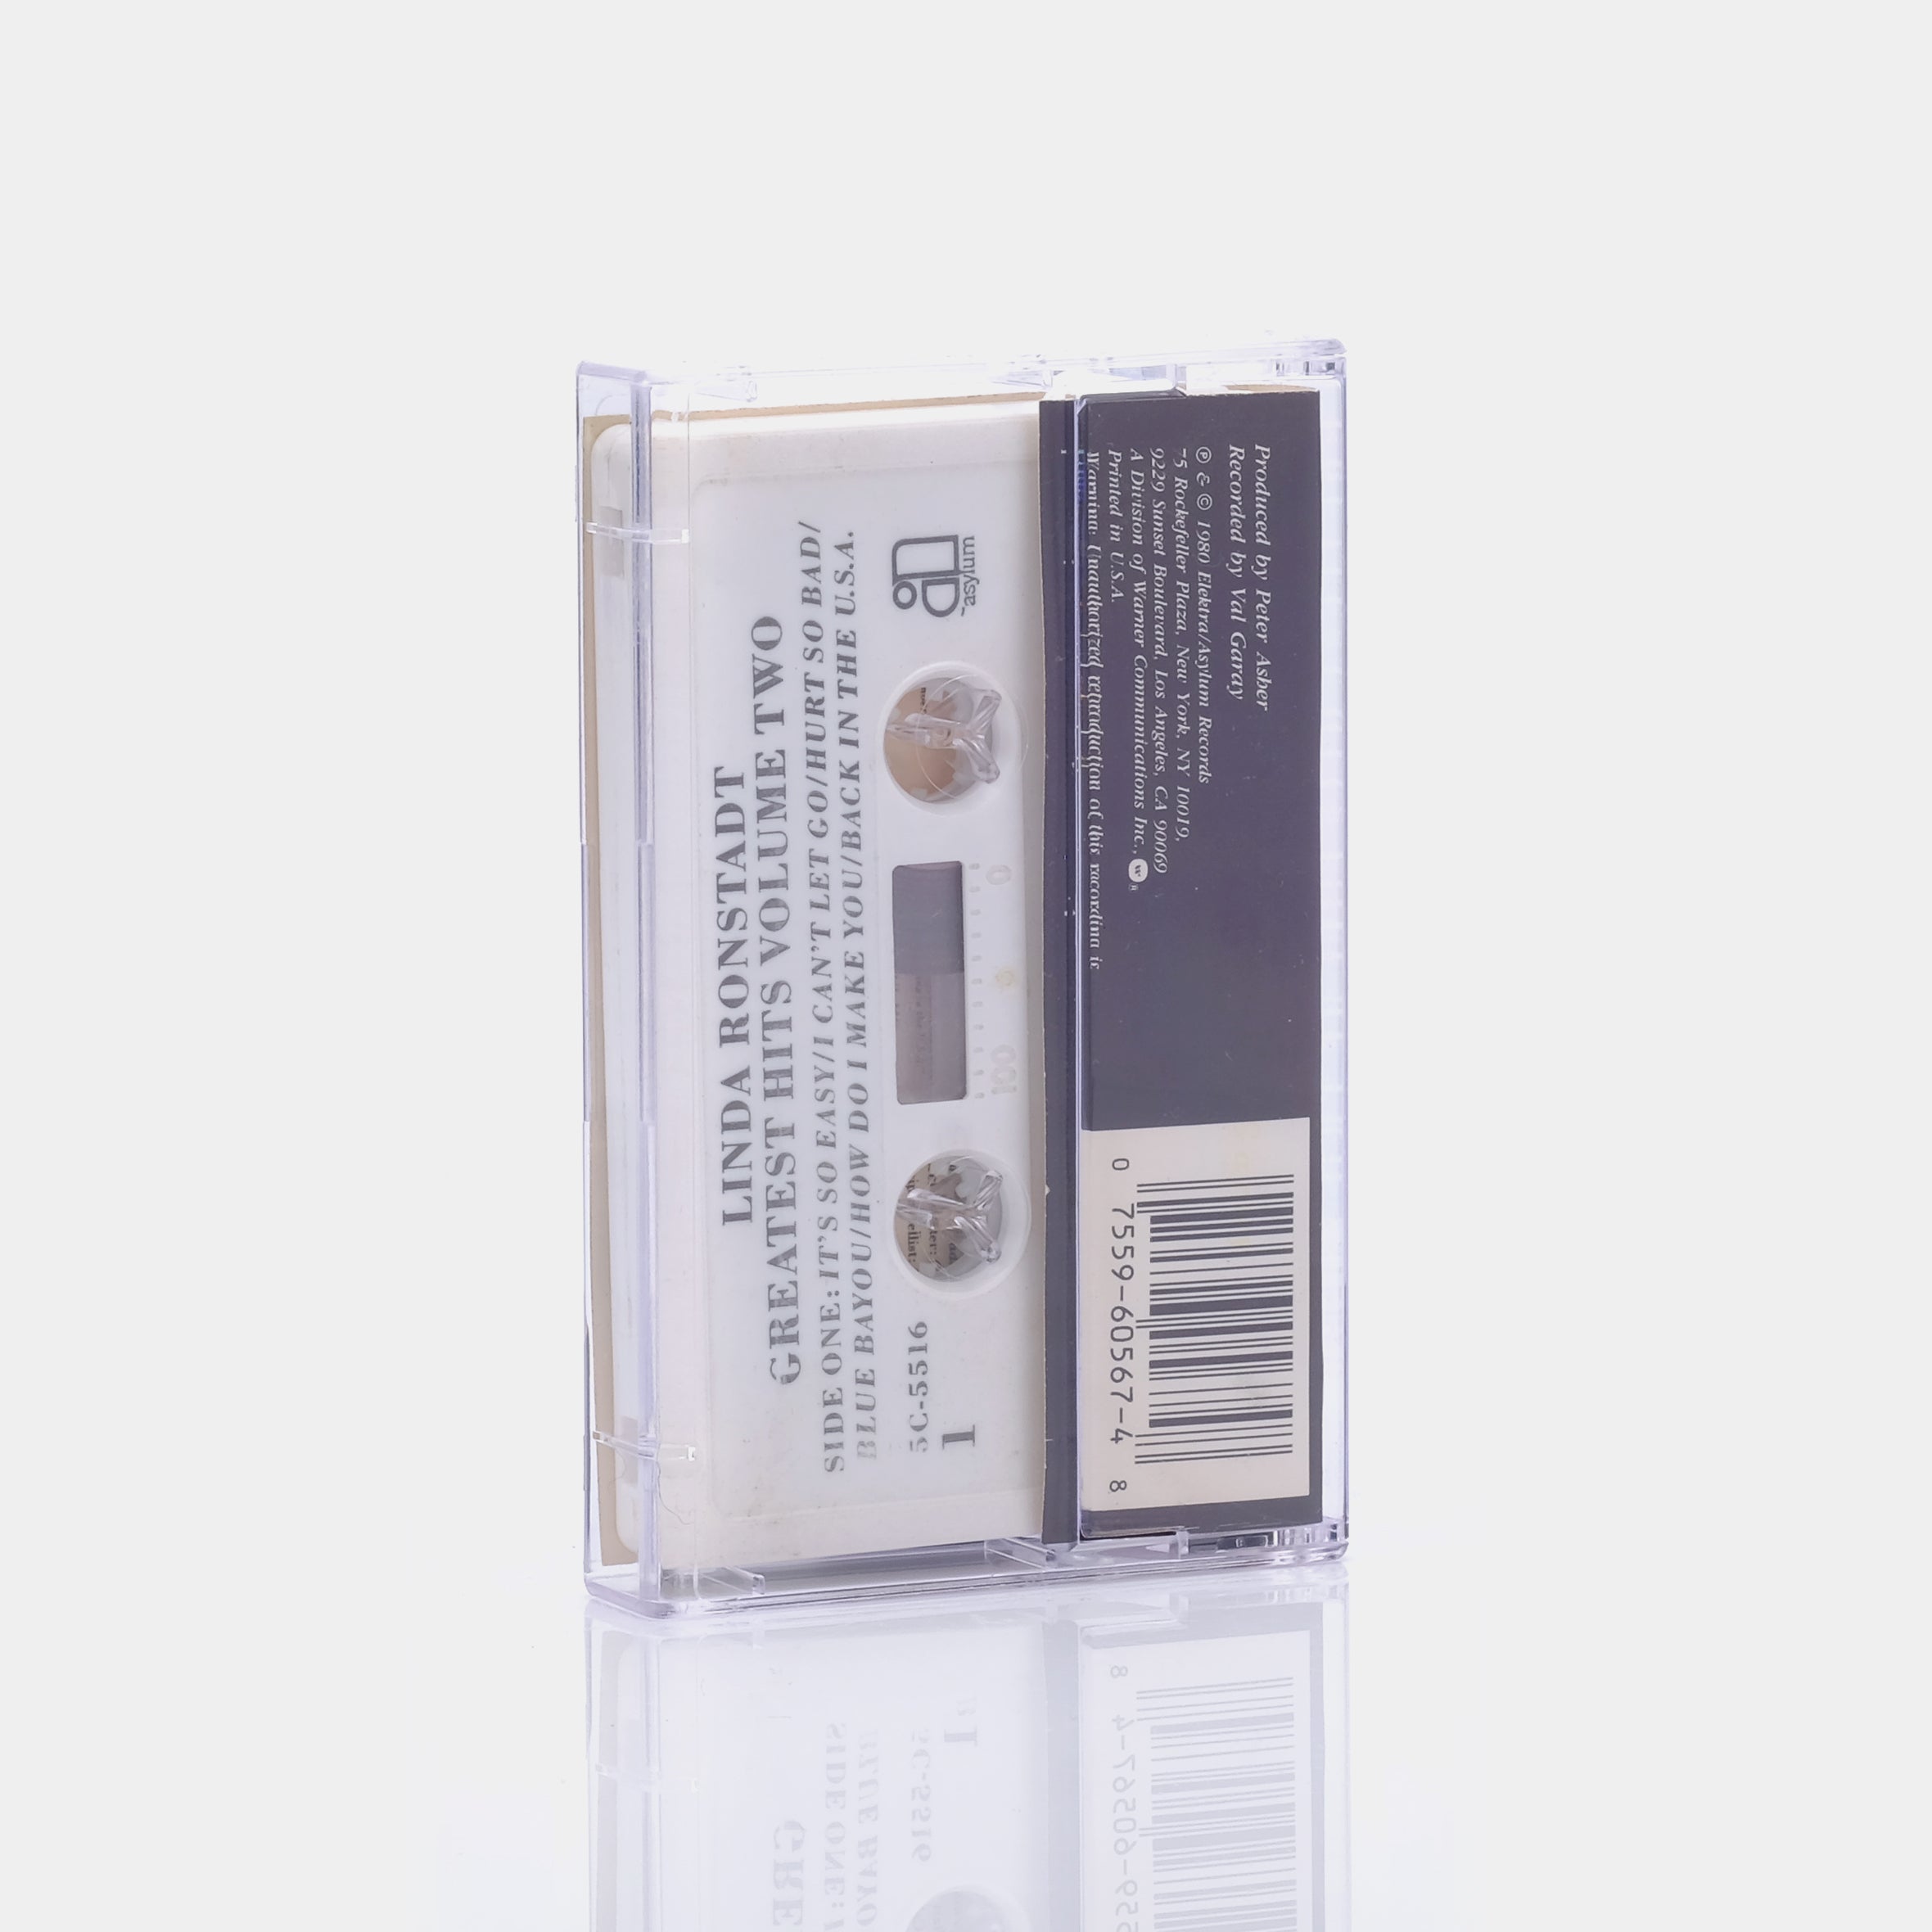 Linda Ronstadt - Greatest Hits Vol. II Cassette Tape